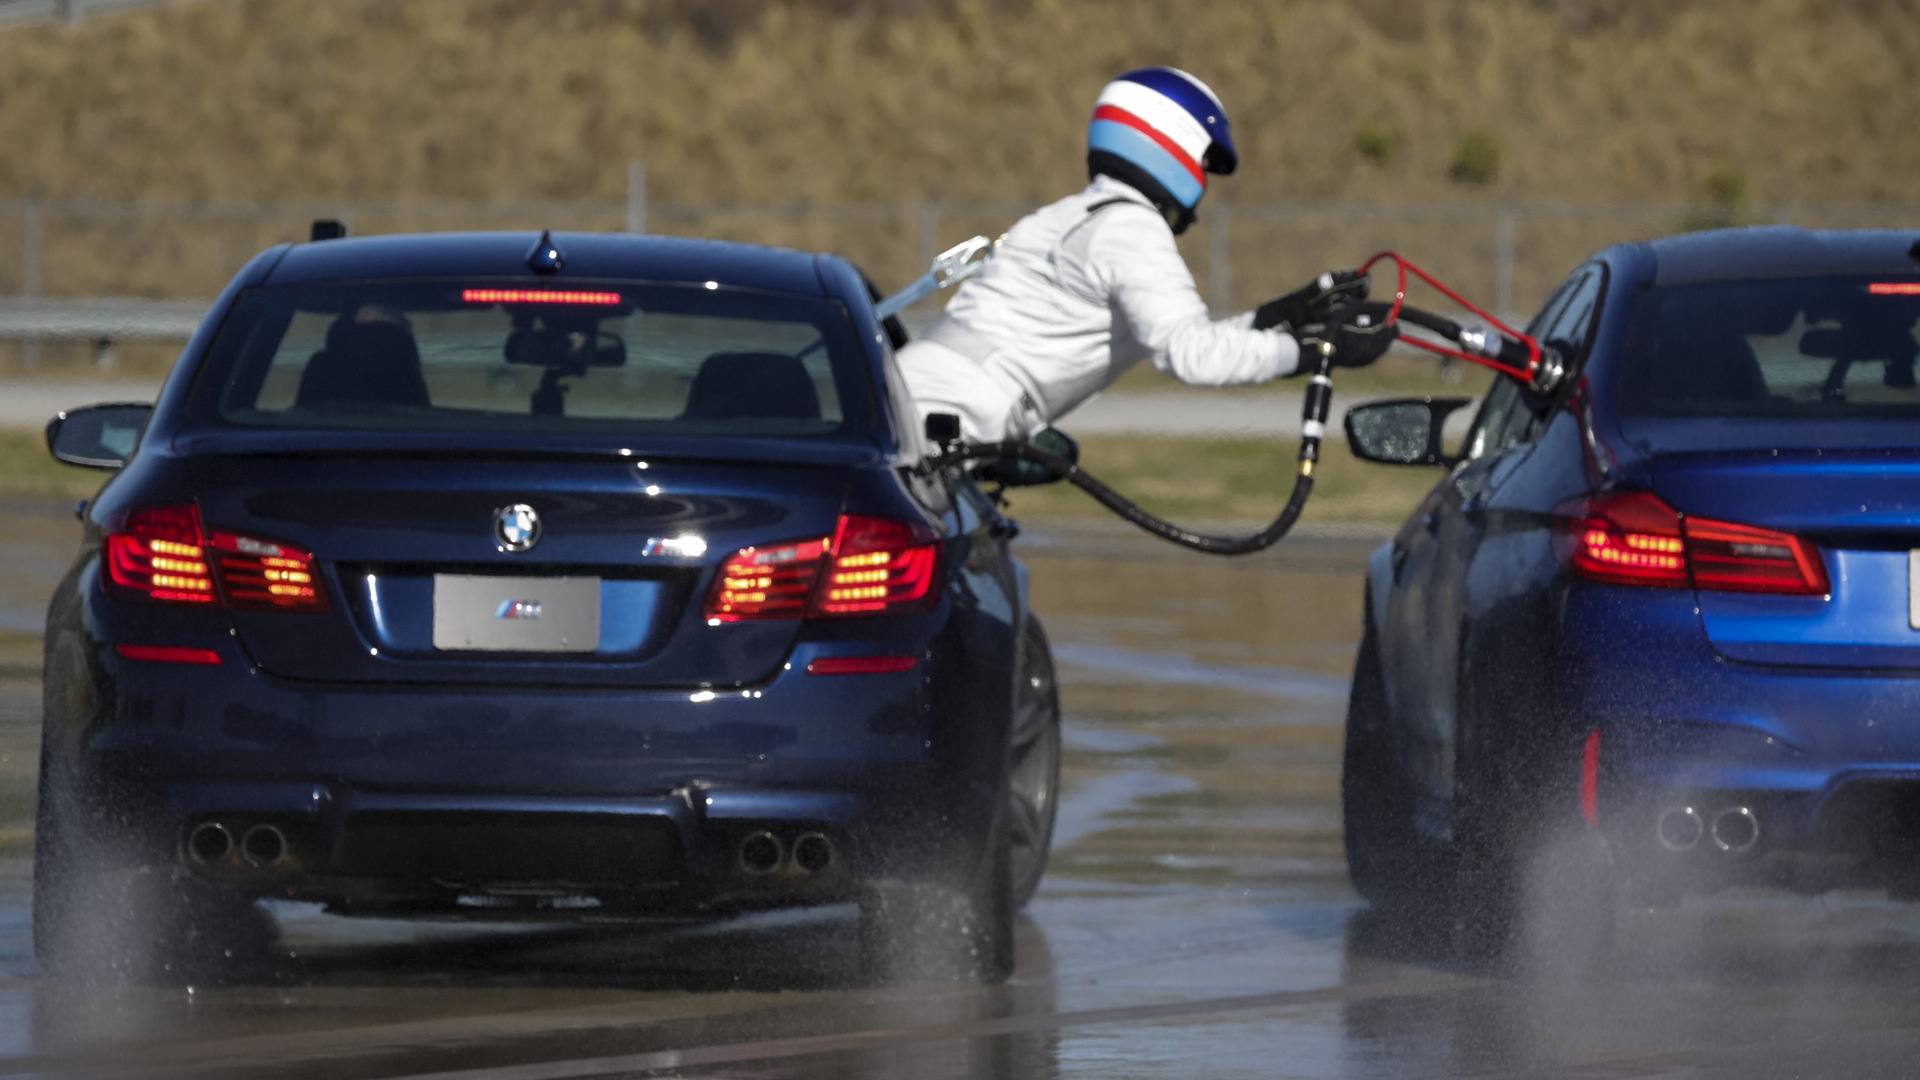 2018 BMW M5 refueling during longest continuous vehicle drift attempt